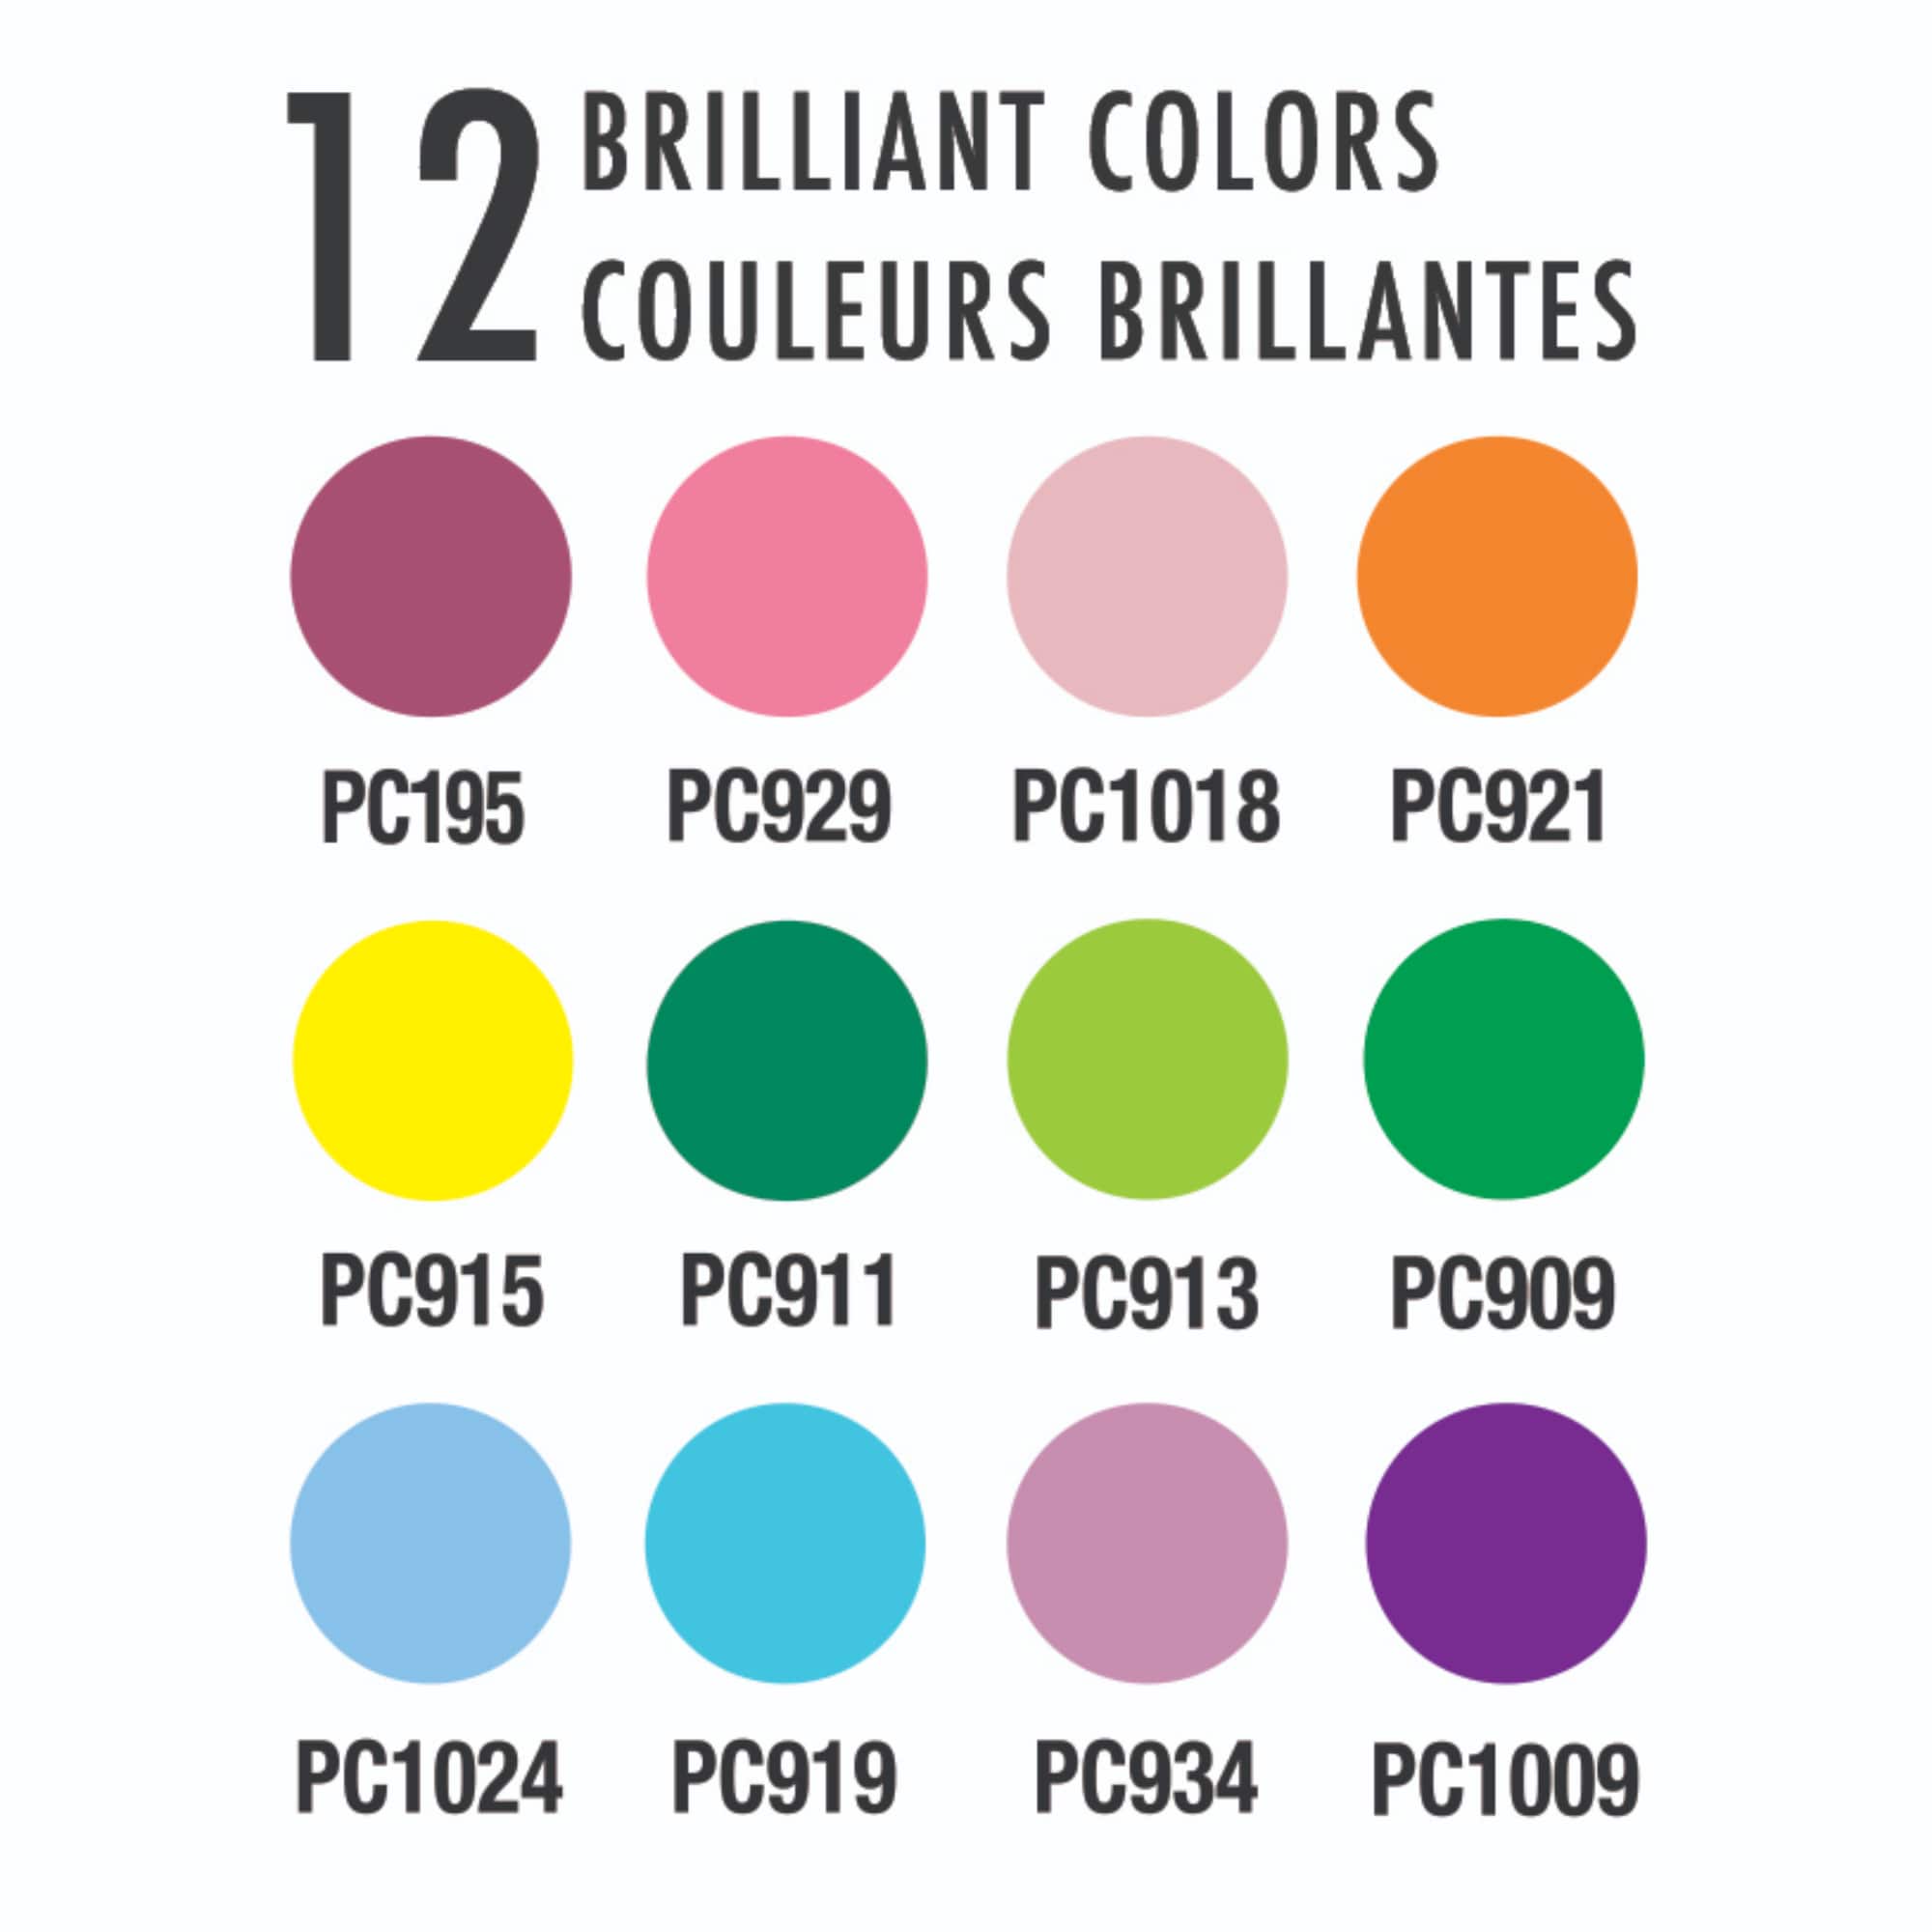 Prismacolor&#xAE; Premier&#xAE; Botanical Garden Colored Pencil Set